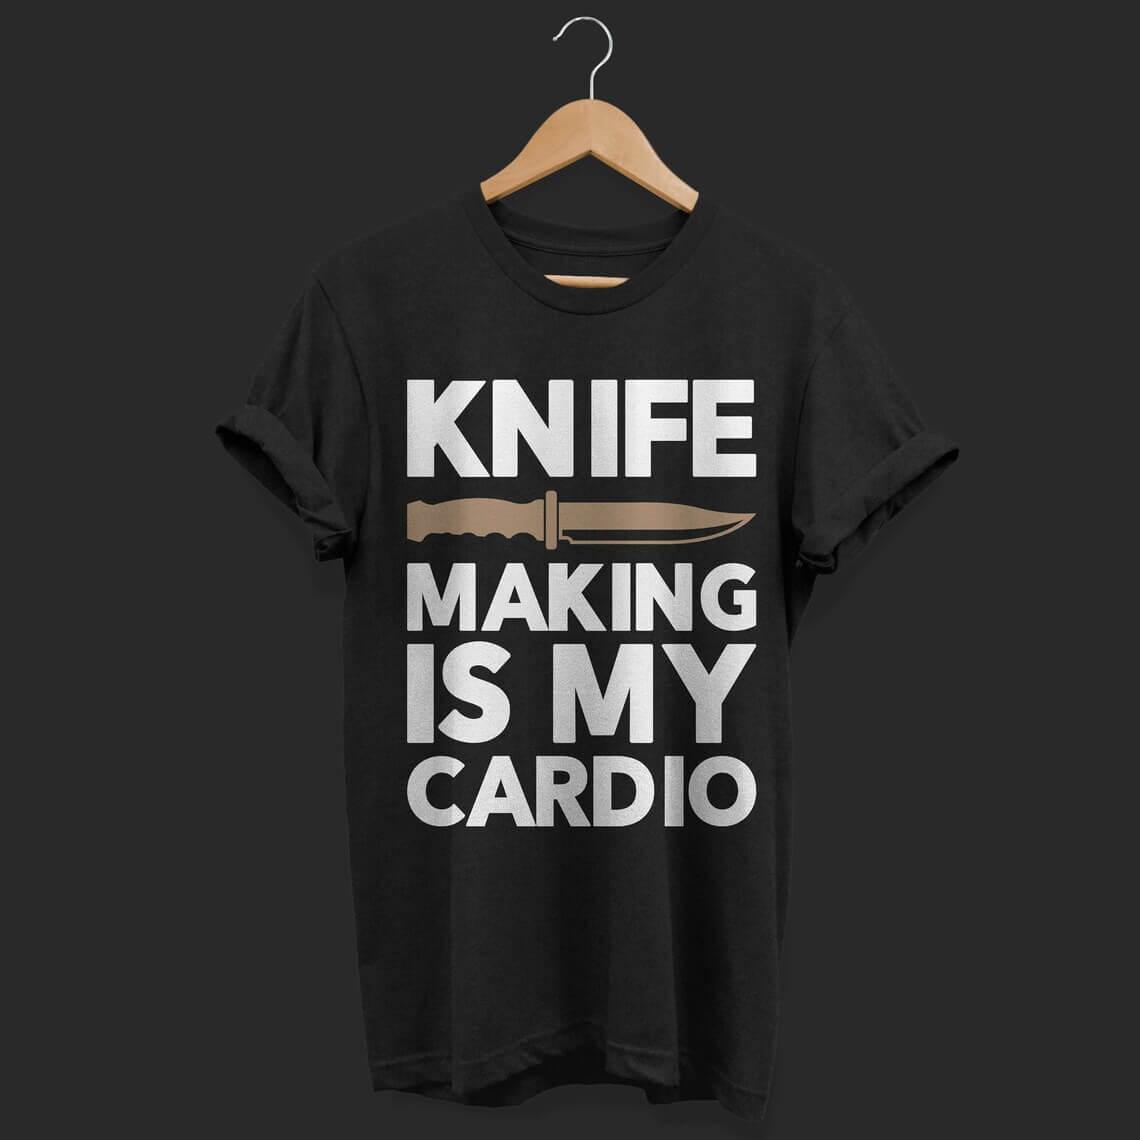 Knife making is my cardio